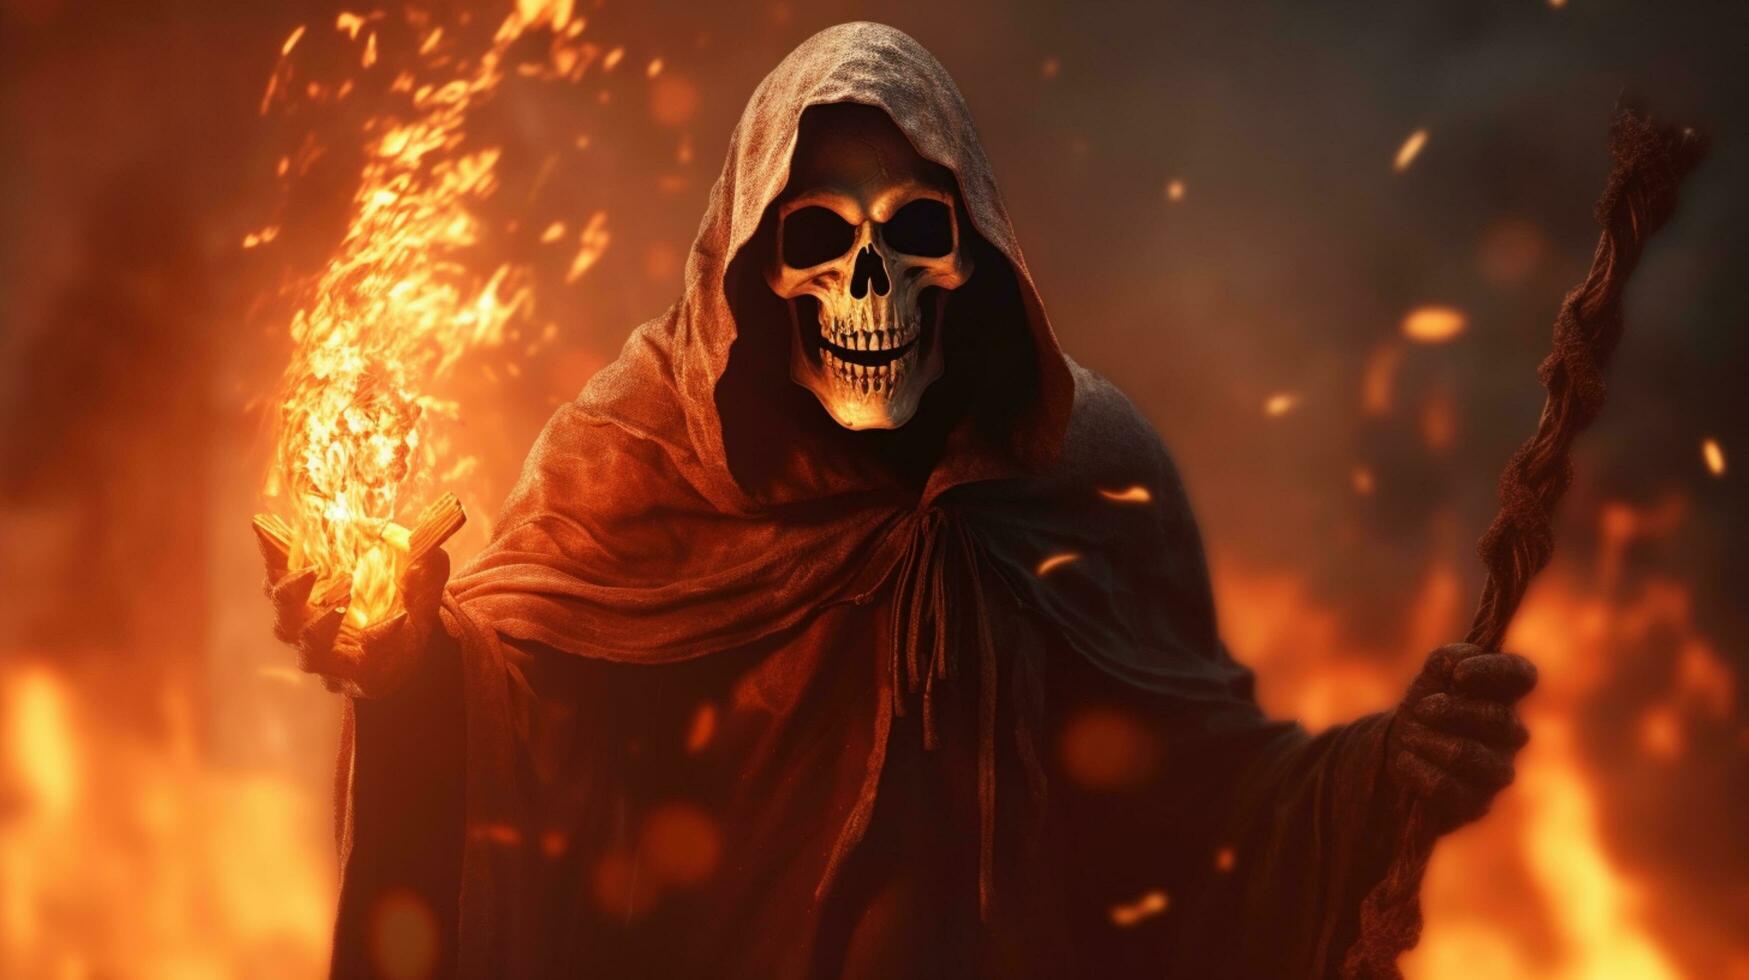 grim reaper with fire landscape illustration photo